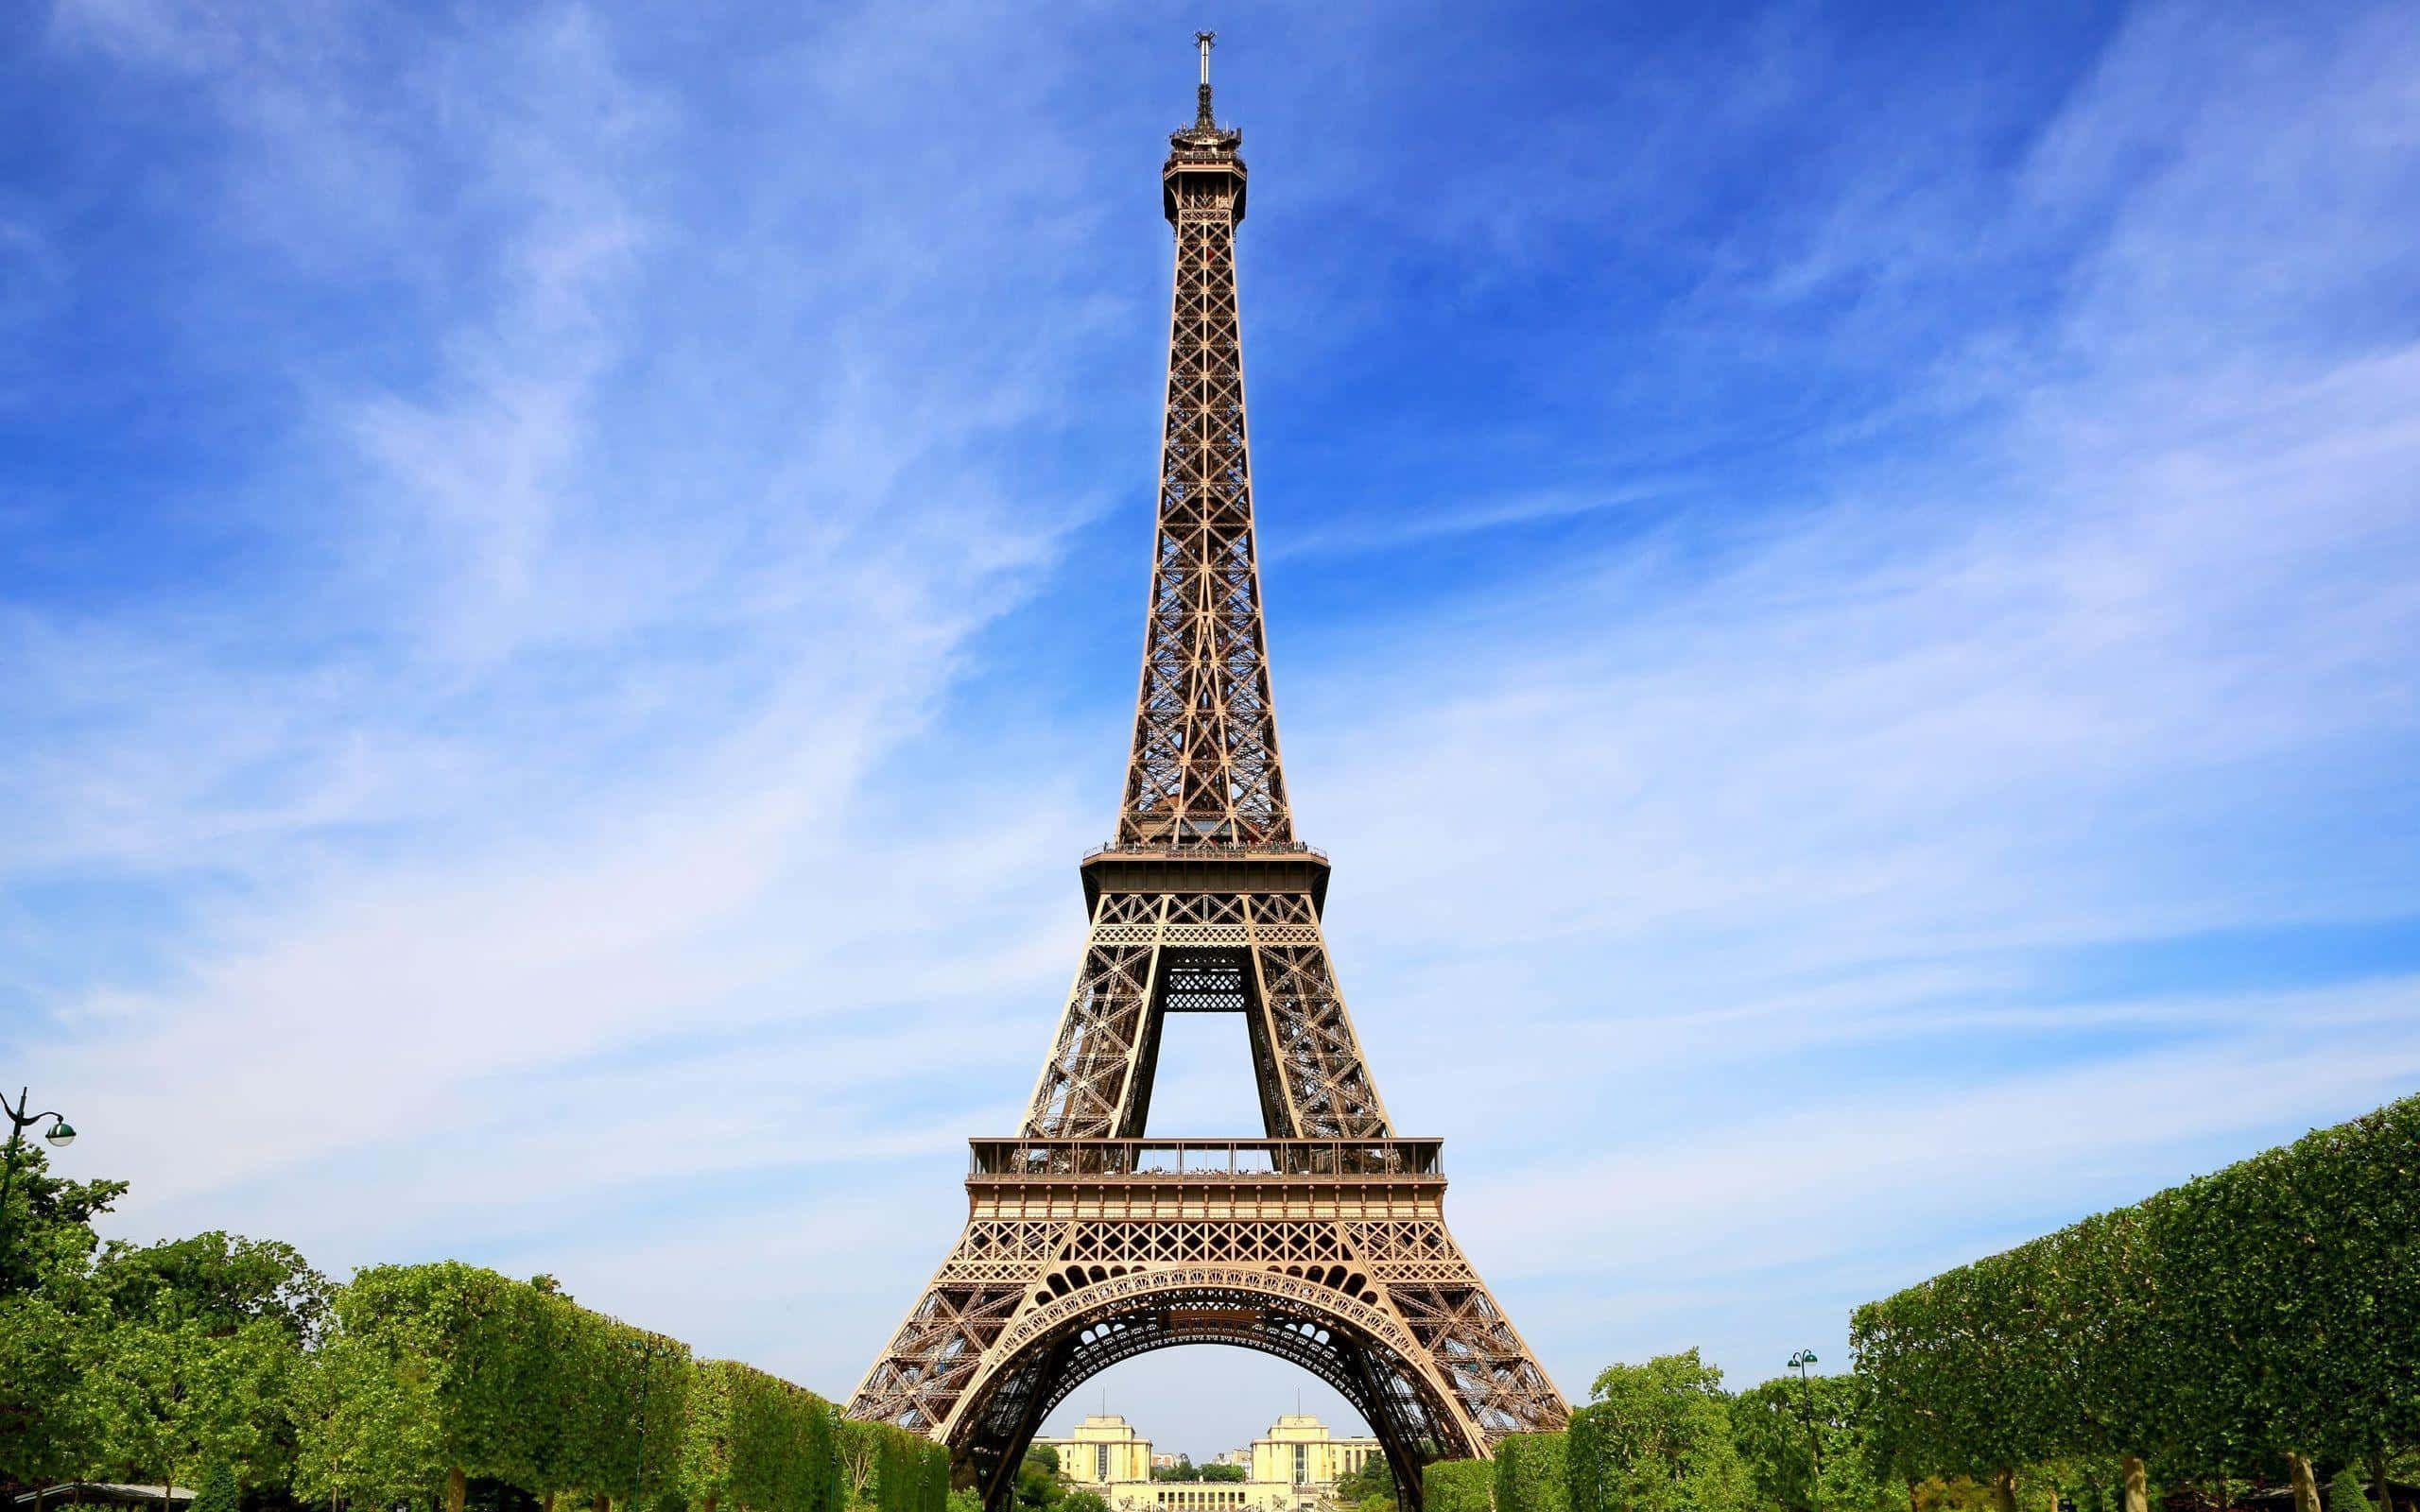 "The breathtaking Eiffel Tower"